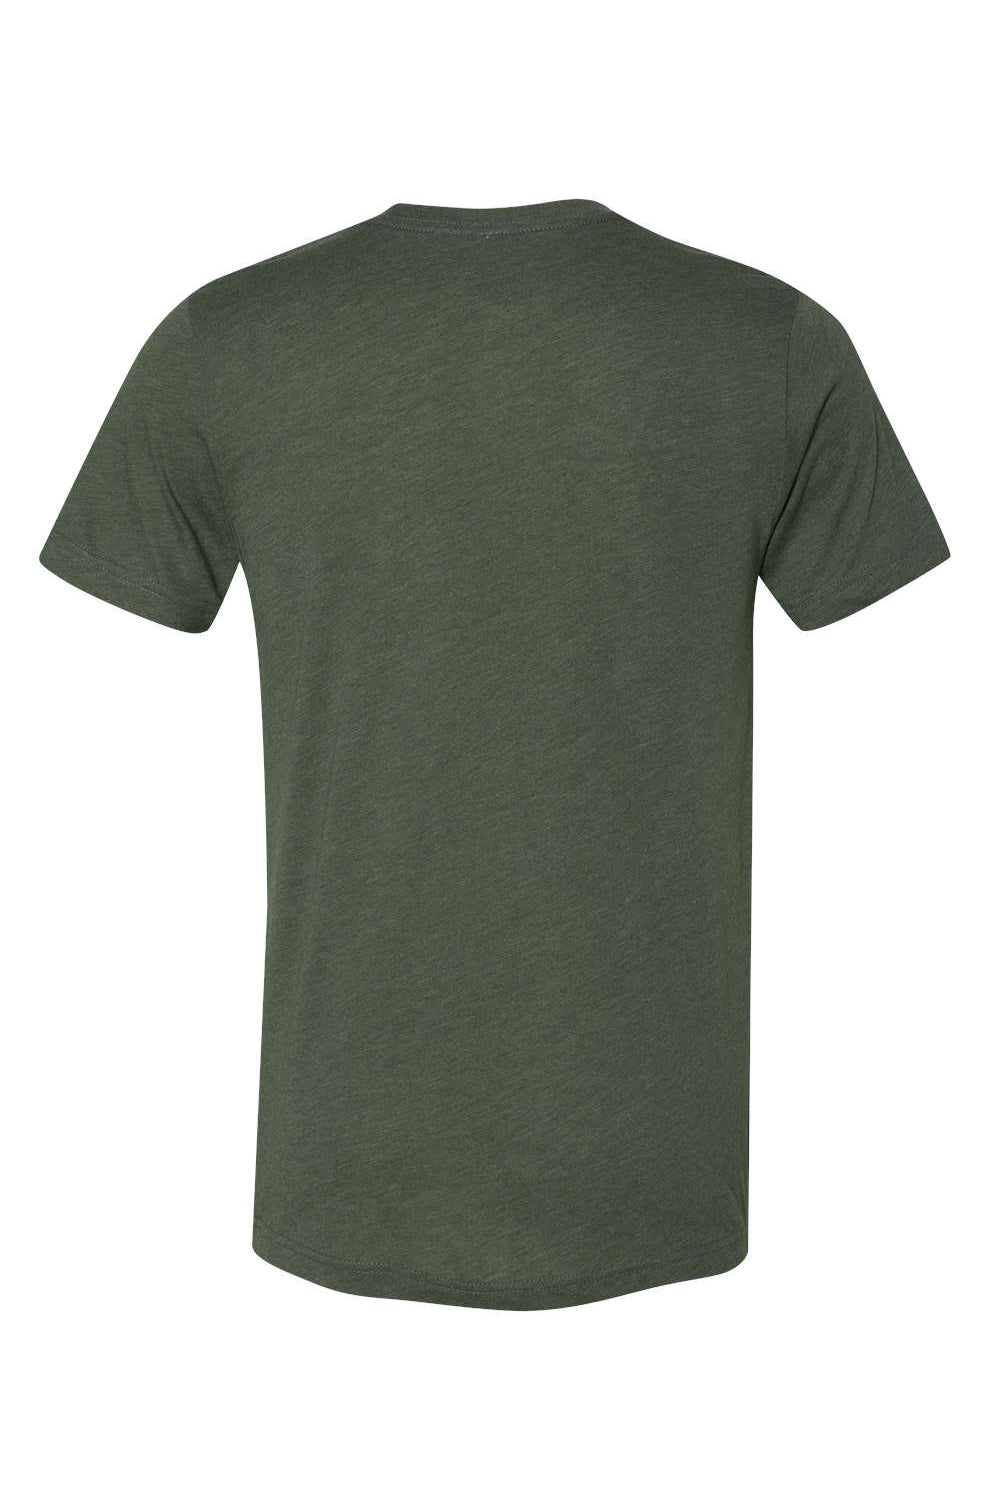 Bella + Canvas BC3413/3413C/3413 Mens Short Sleeve Crewneck T-Shirt Military Green Flat Back